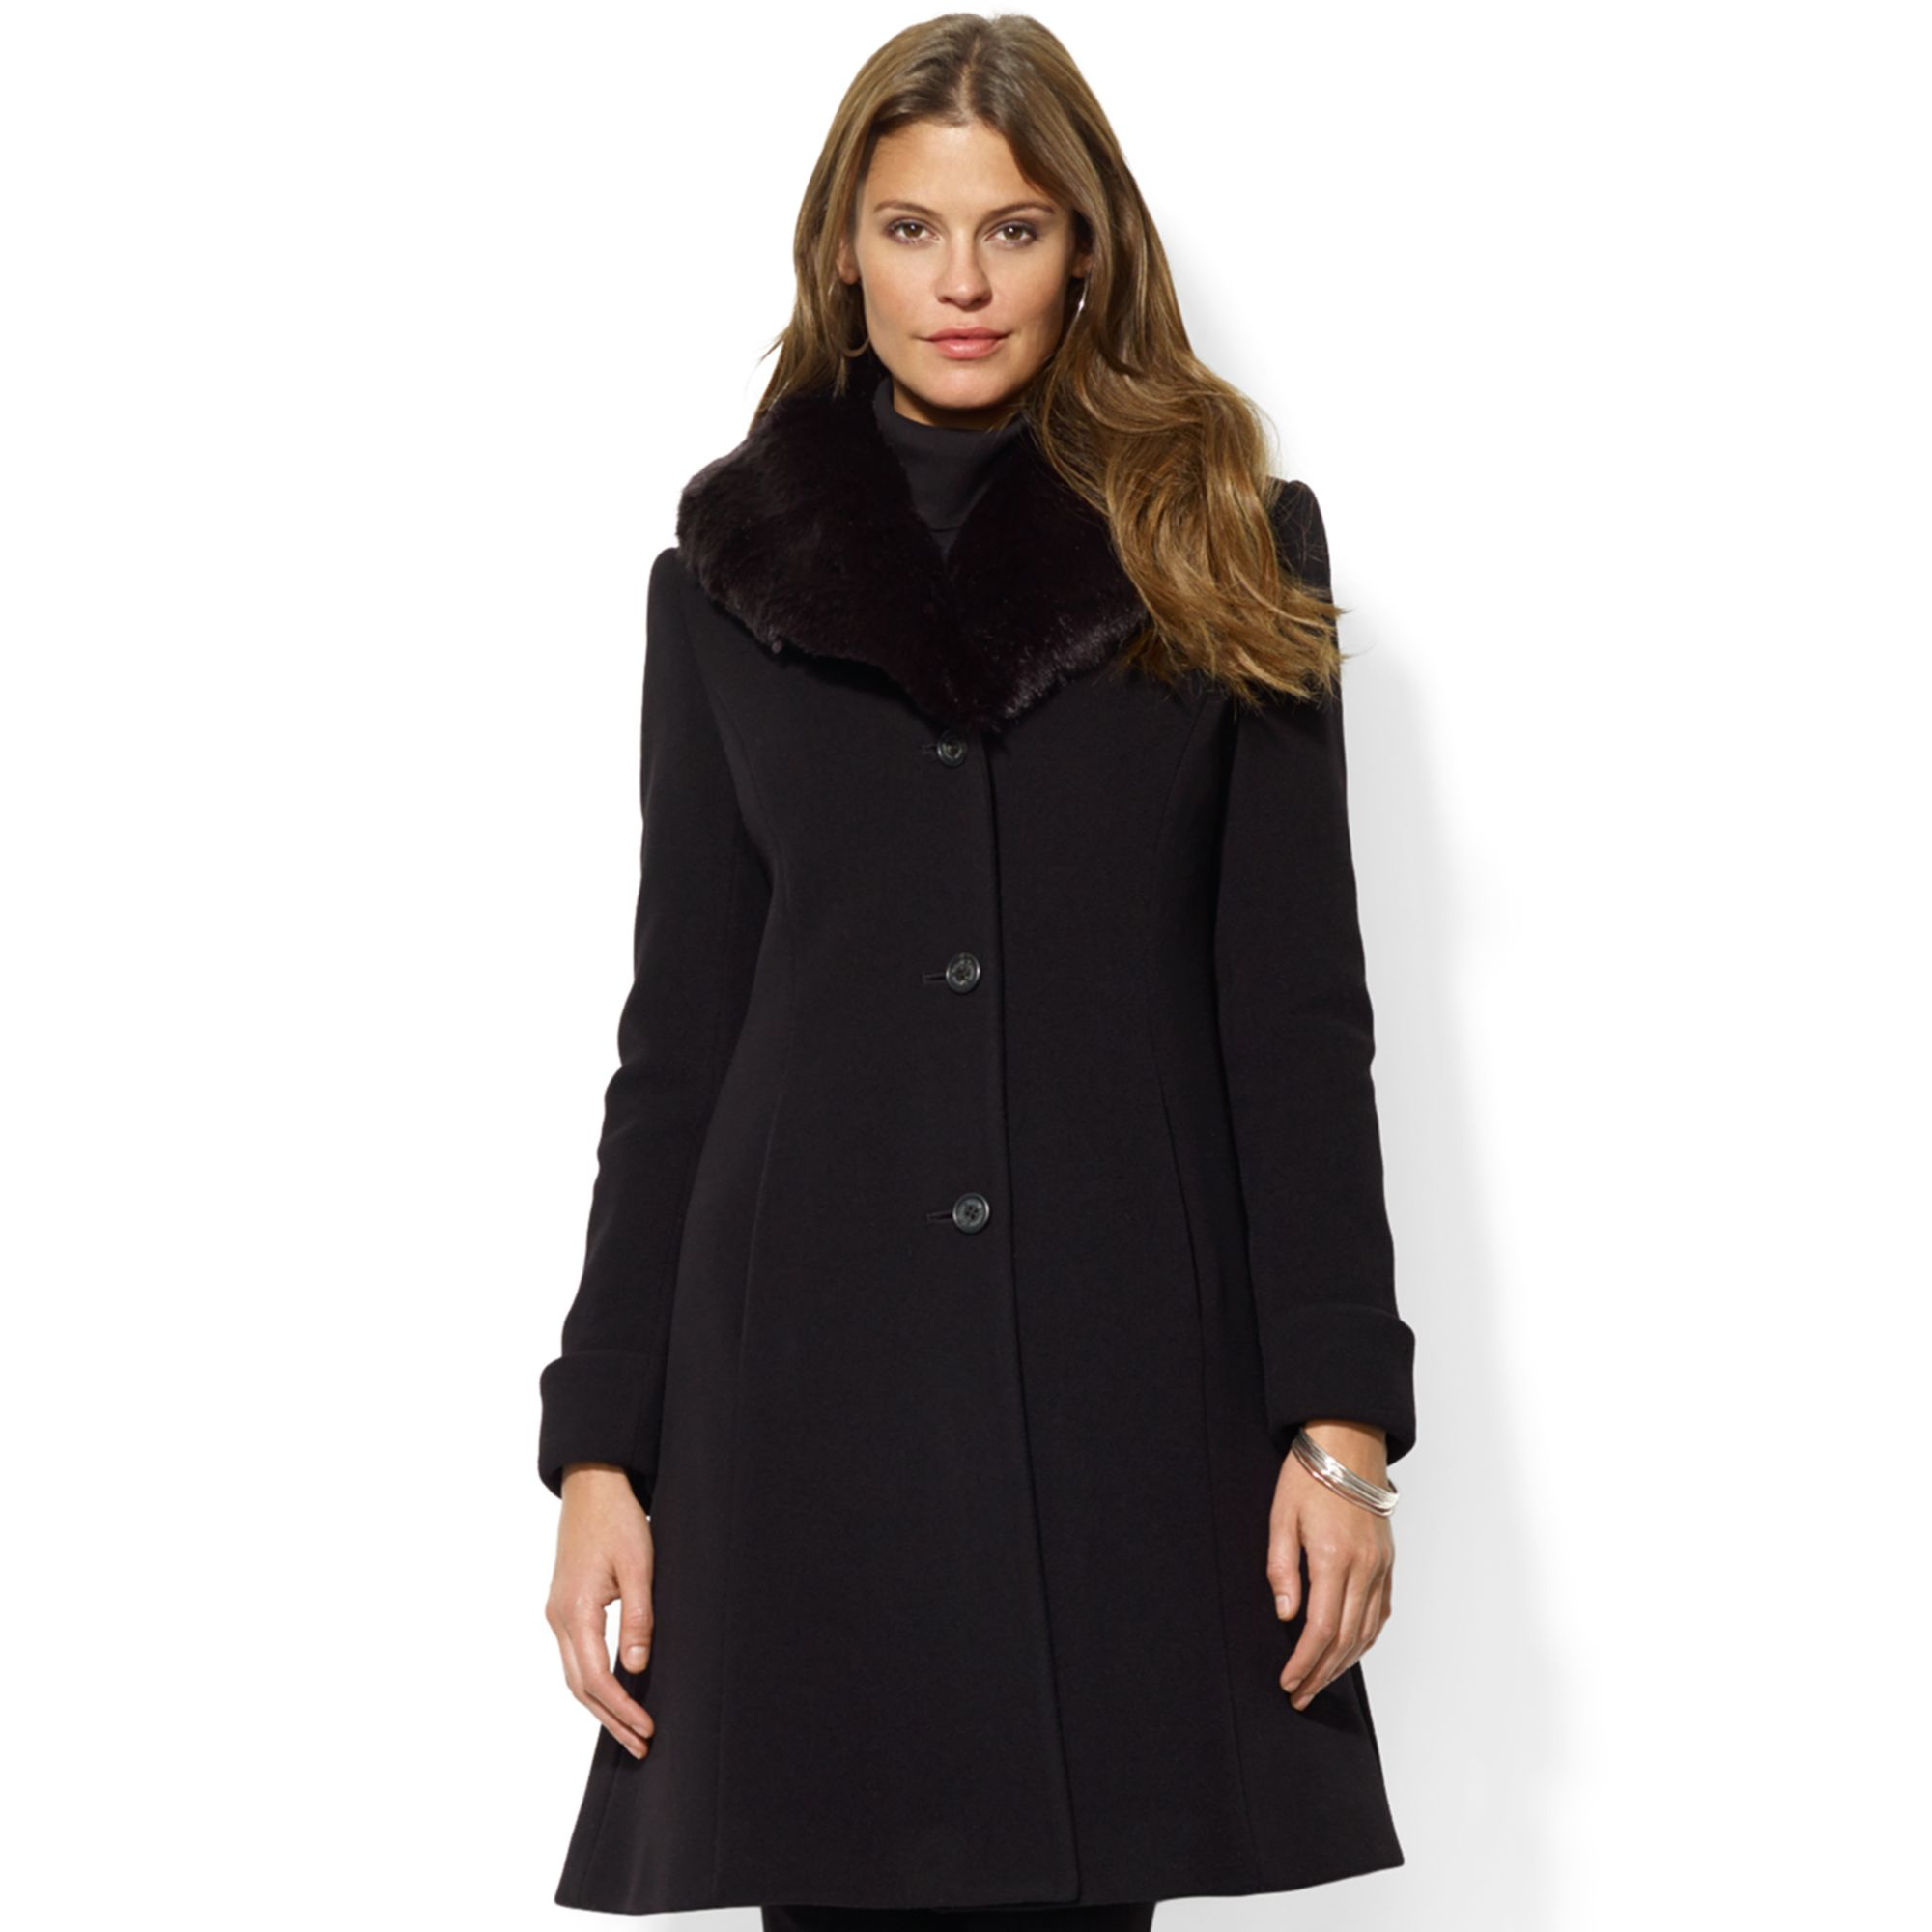 Lauren By Ralph Lauren Fauxfurcollar Woolcashmereblend Coat in Black | Lyst